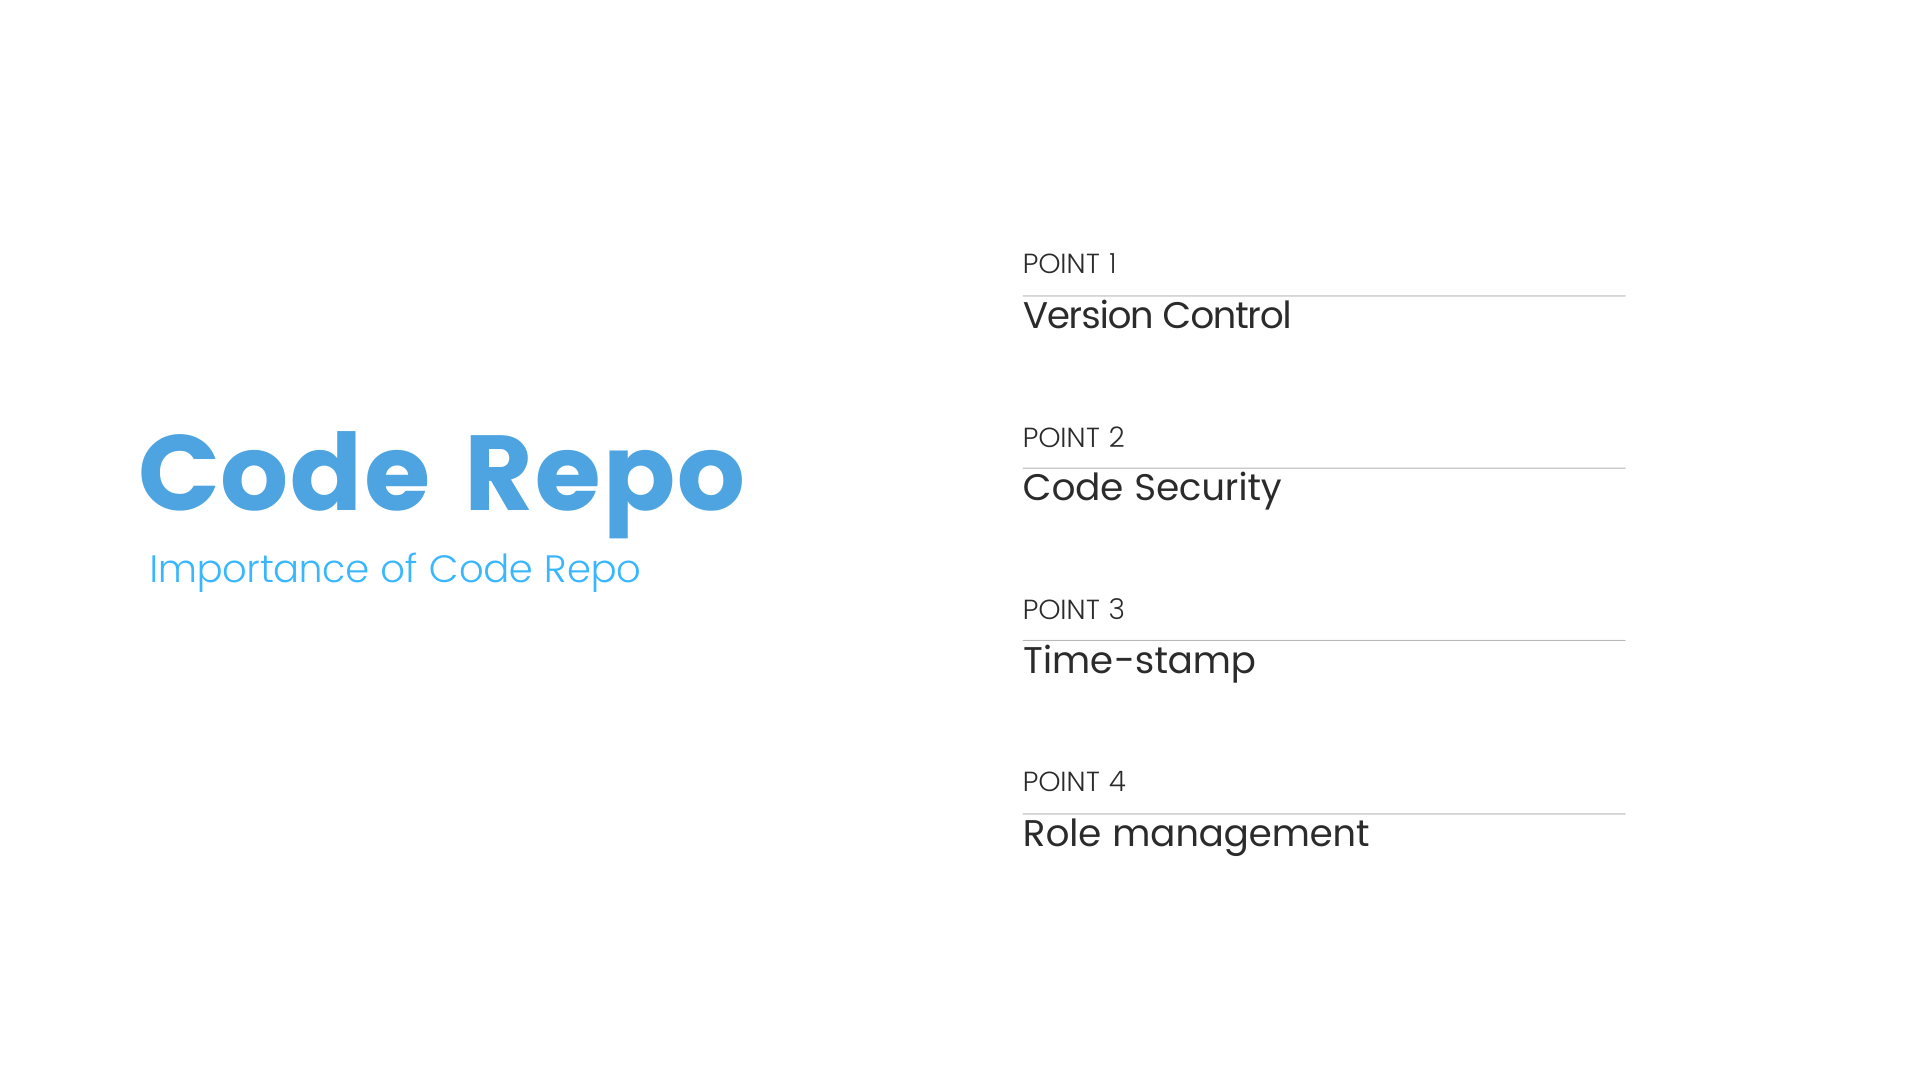 Importance of Code Repo